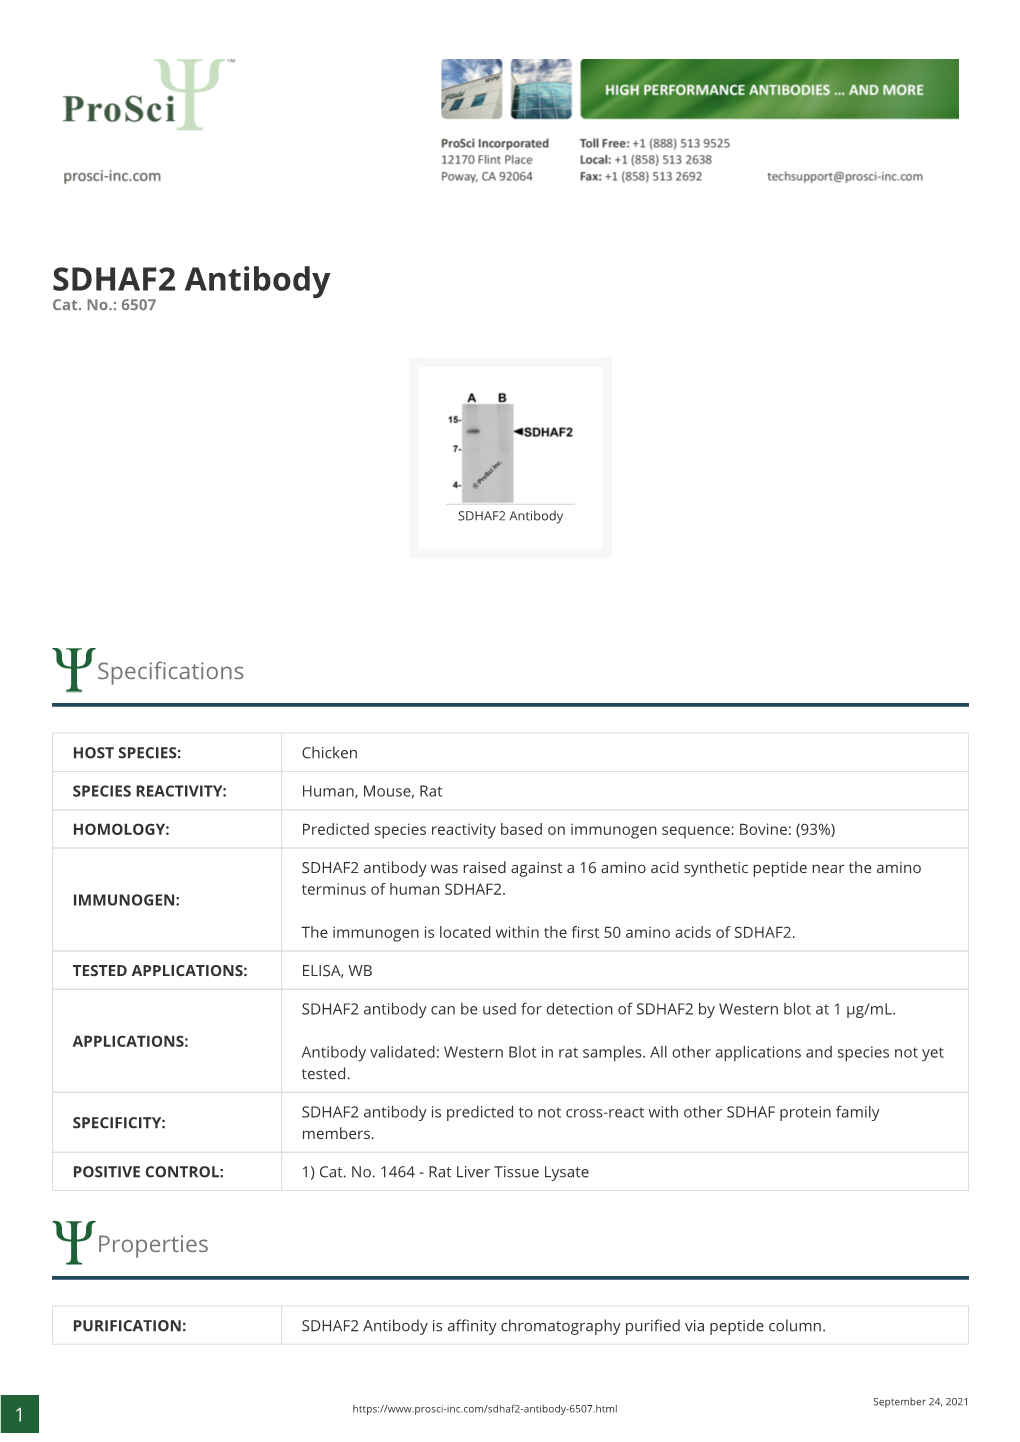 SDHAF2 Antibody Cat